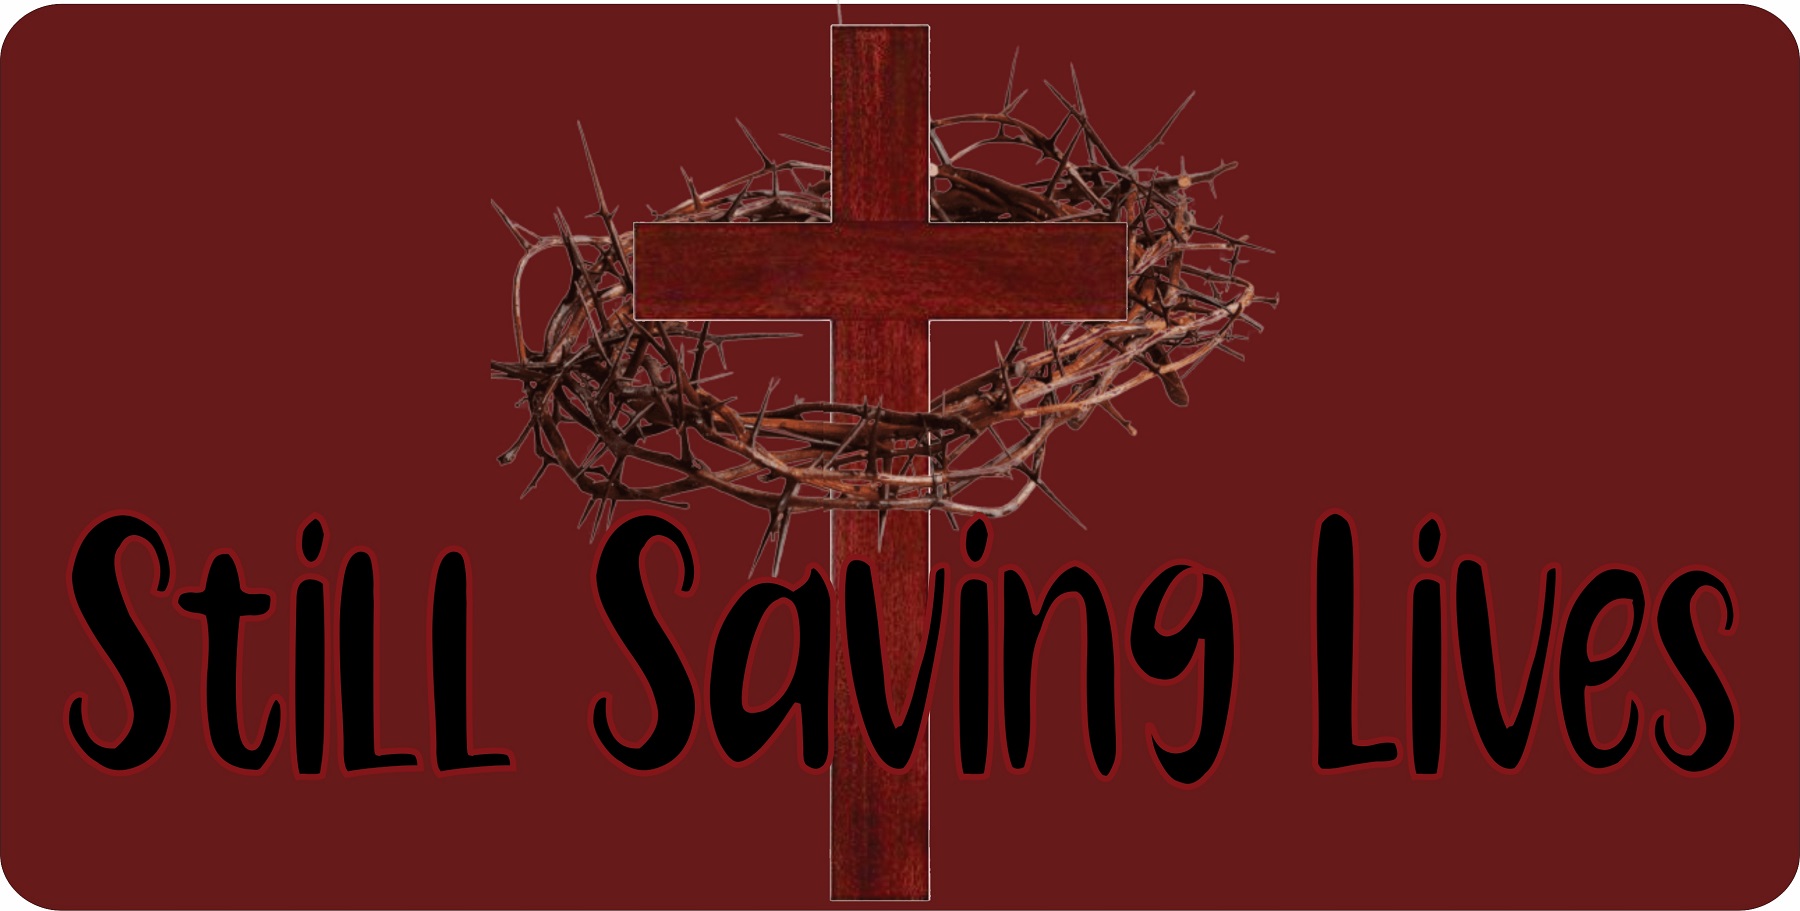 Jesus Cross Still Saving Lives Burgundy Photo LICENSE PLATE